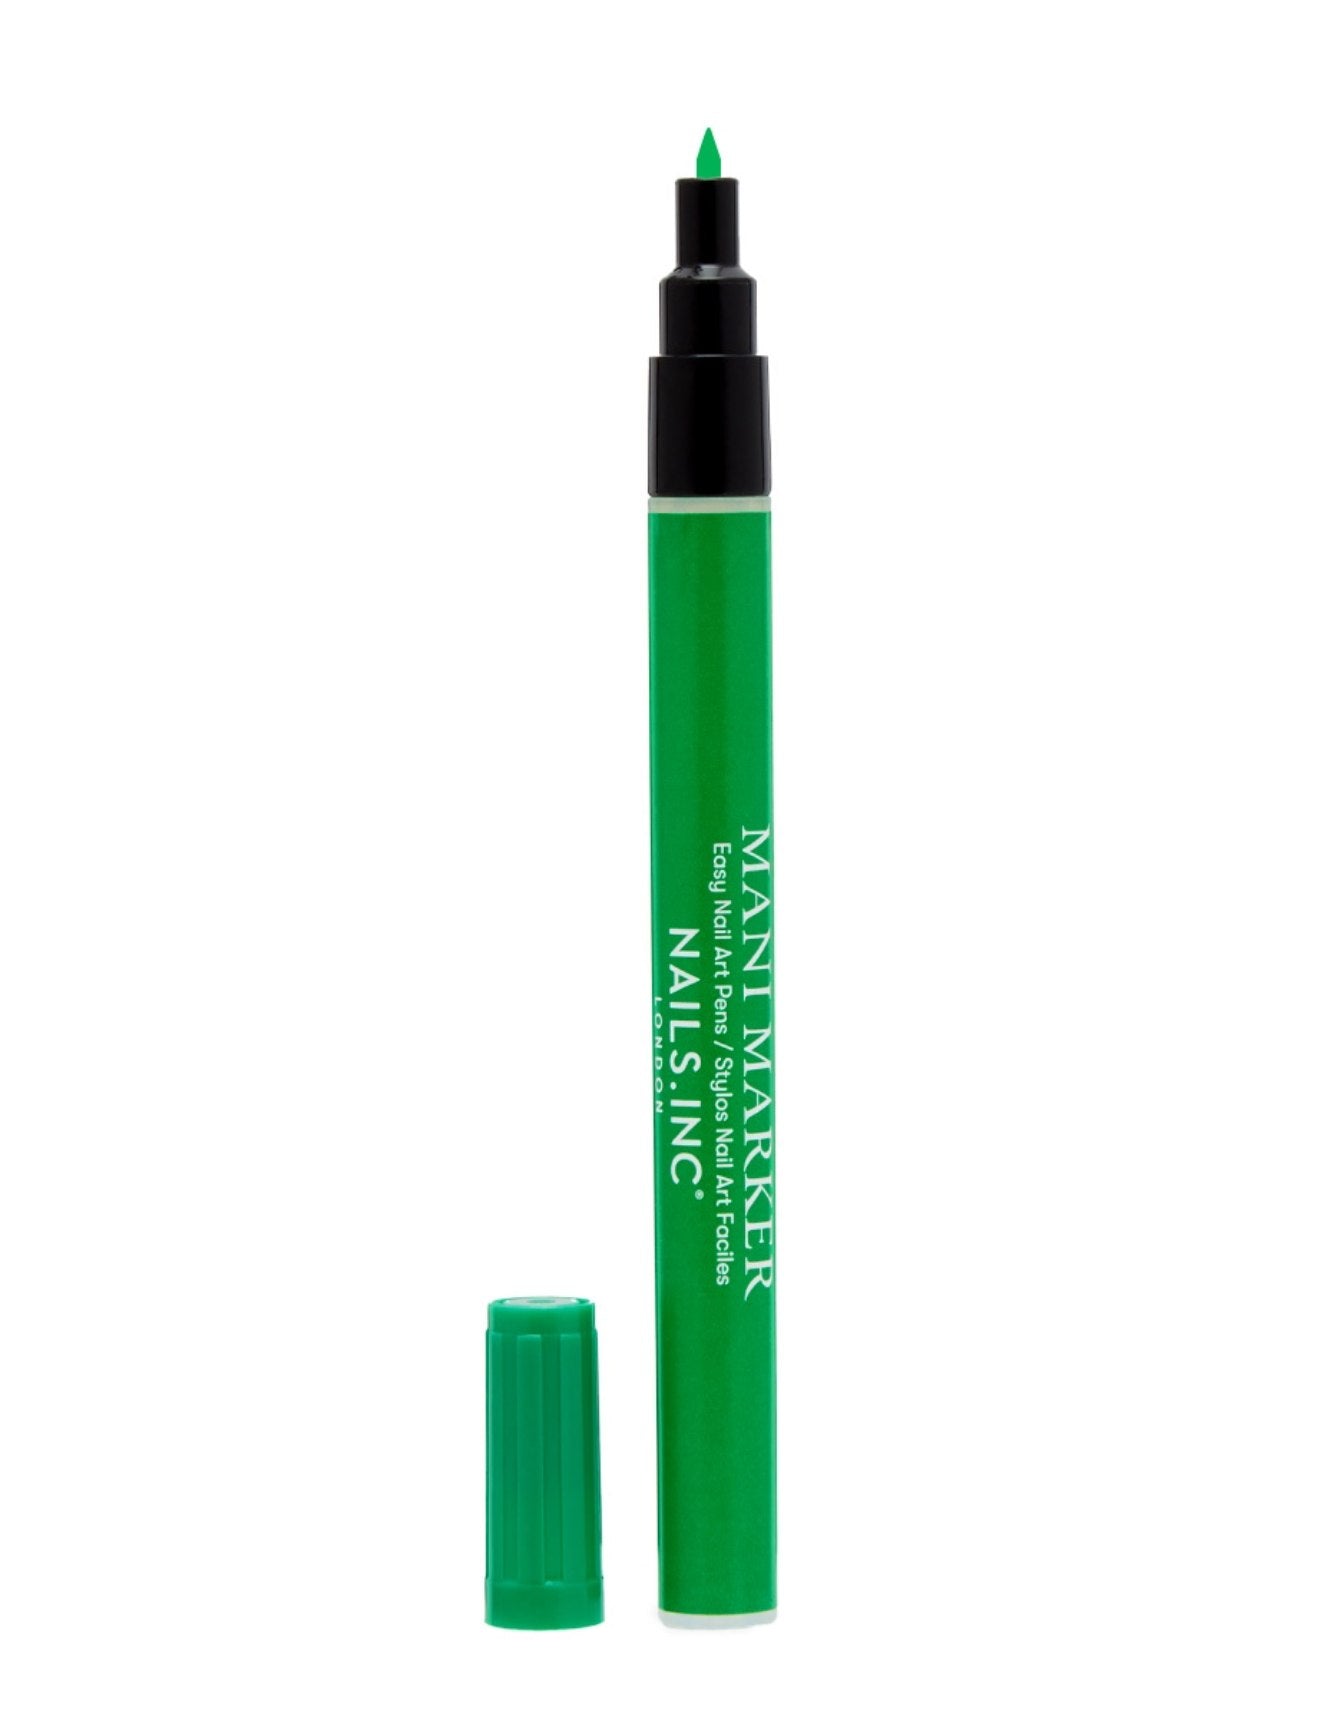 Mani Marker Easy Nail Art Pen - Kale Green